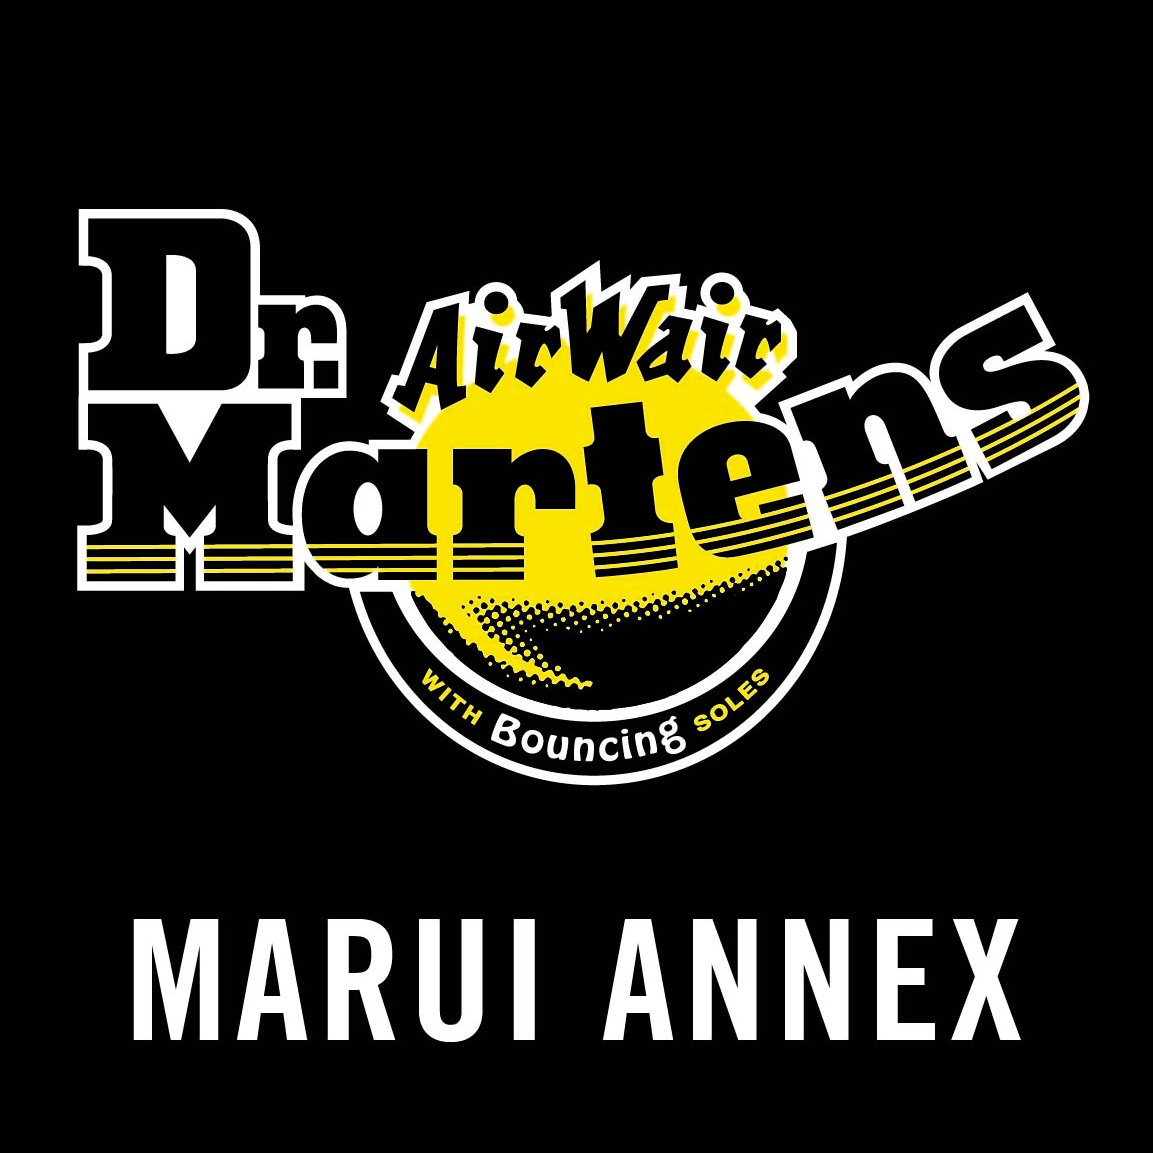 MADE STRONG  SINCE 1960
 Dr.Martens 新宿マルイアネックス店公式Twitterです。店舗や在庫等のお問い合わせはお電話でお願い致します。 電話番号：03-6457-4655